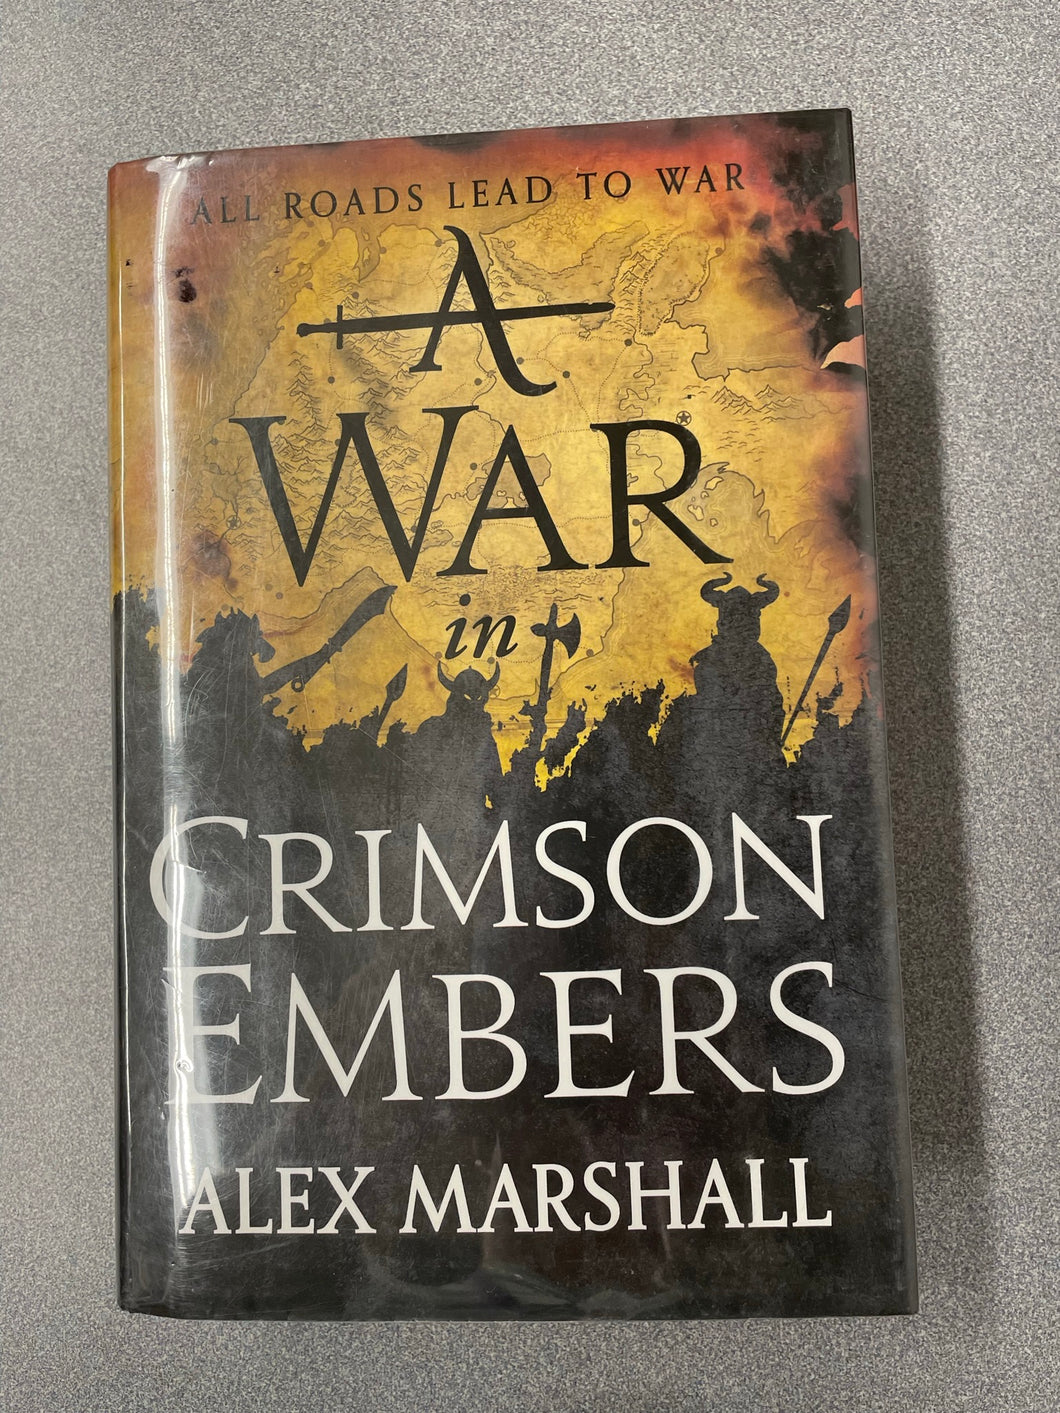 Marshall, Alex, A War in Crimson Embers [2017] SF 9/23